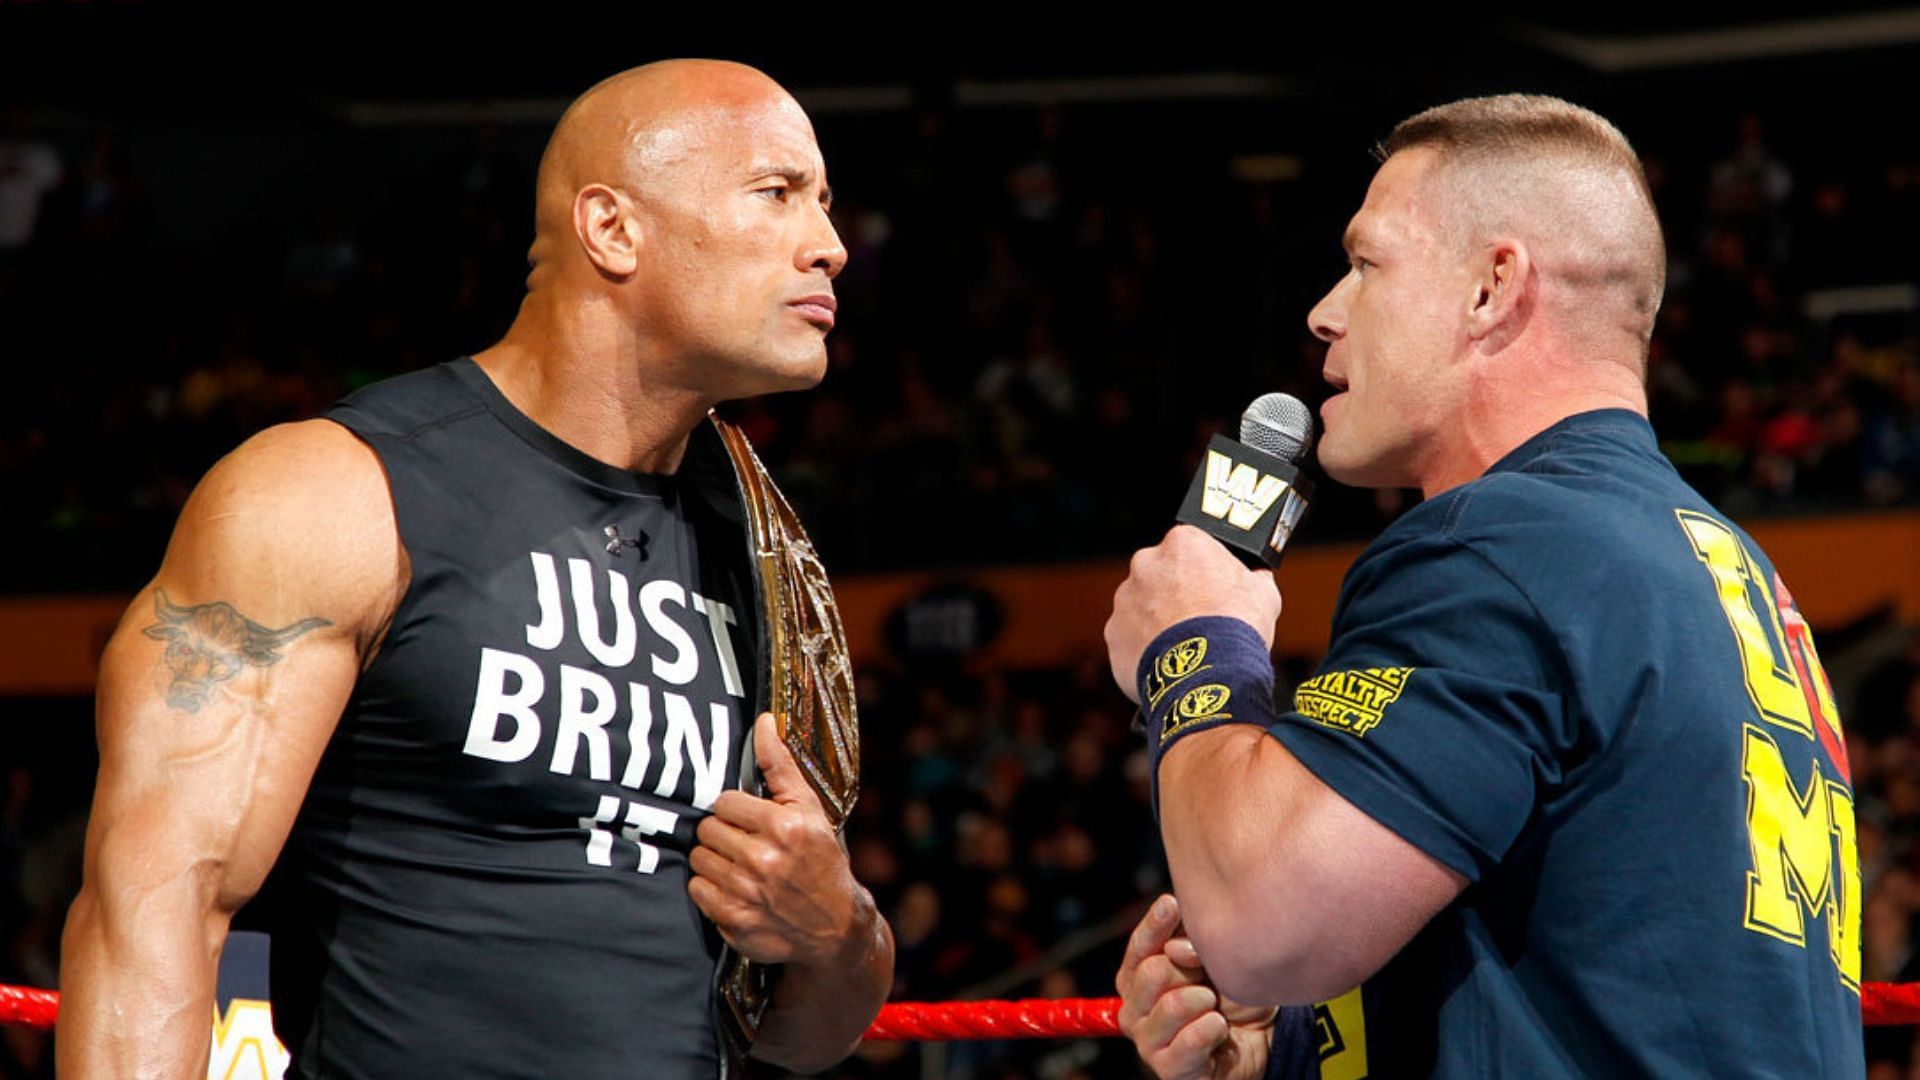 WWE Legends Dwayne The Rock Johnson and John Cena